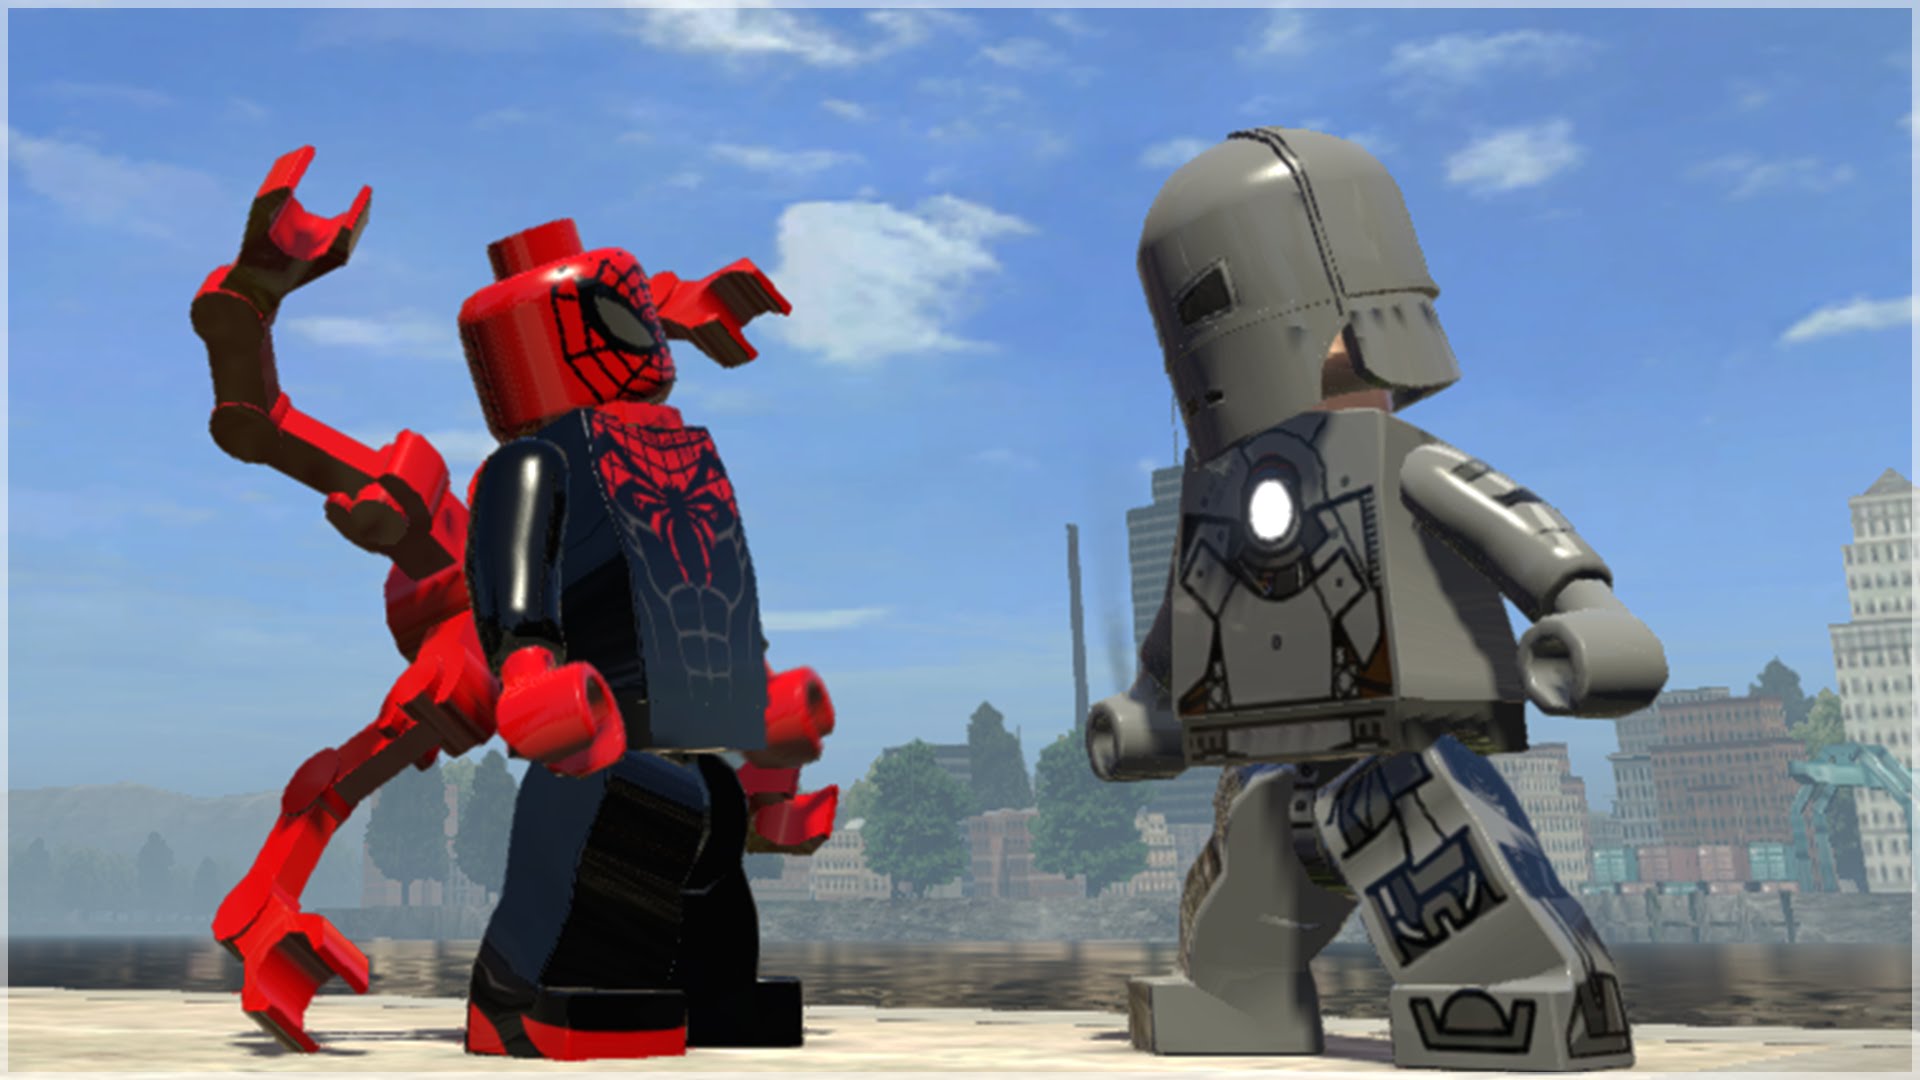 LEGO SUPERIOR SPIDER MAN VS IRON MAN   EPIC BATTLE LEGO Marvel Super